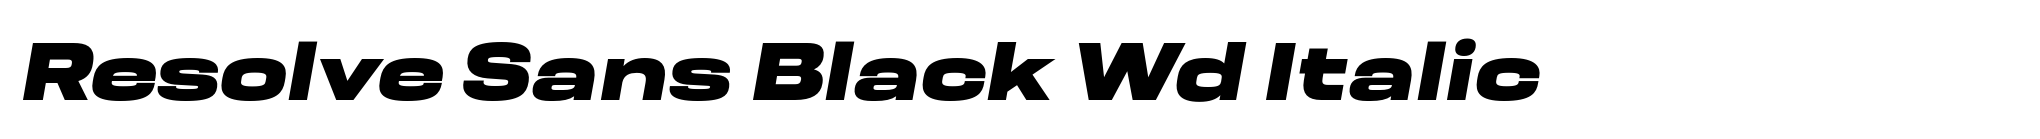 Resolve Sans Black Wd Italic image